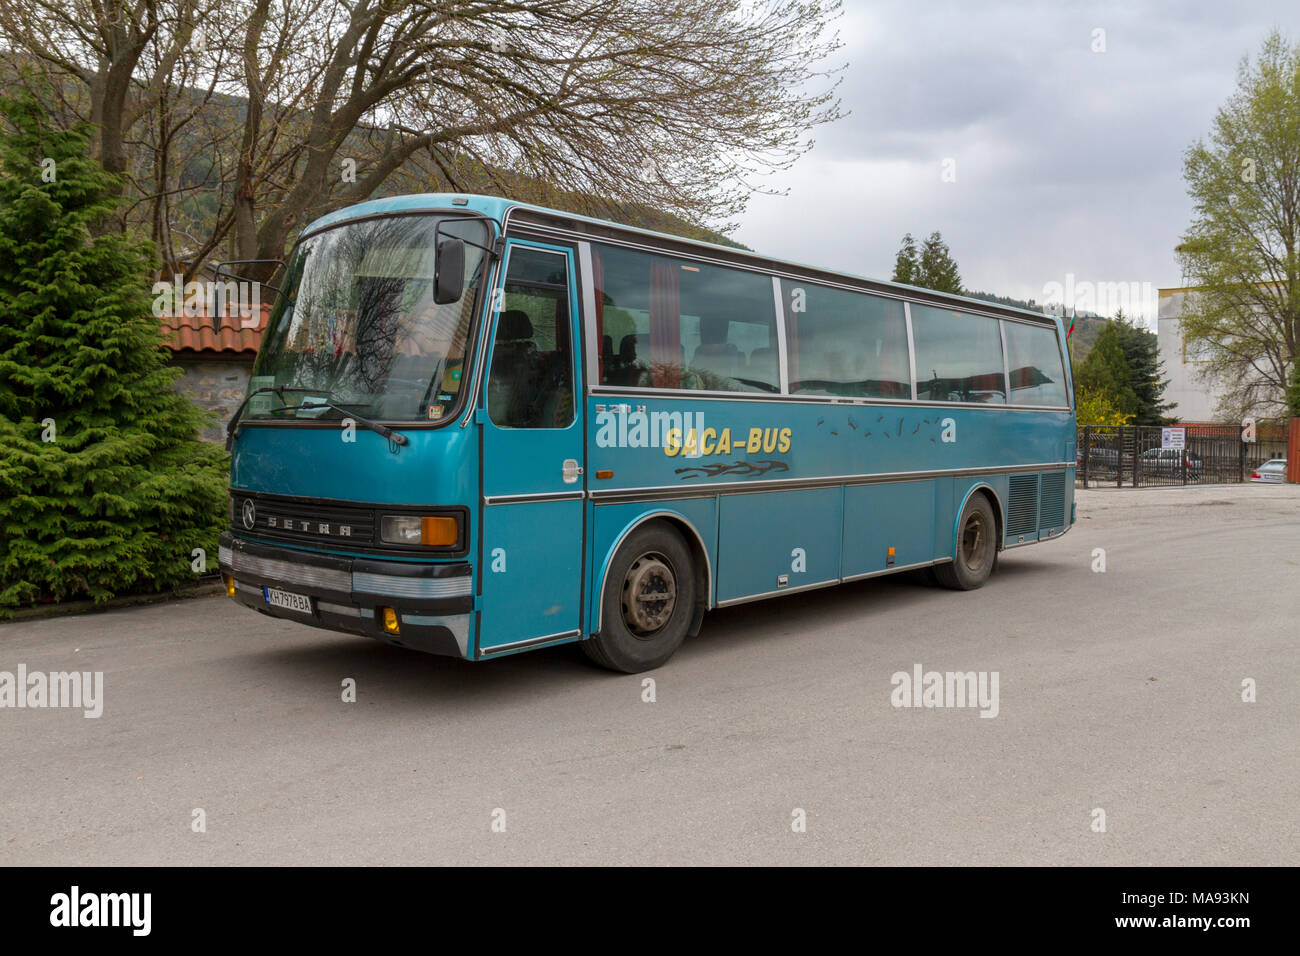 A typical local bus in Rila Village, southwestern Bulgaria. Stock Photo